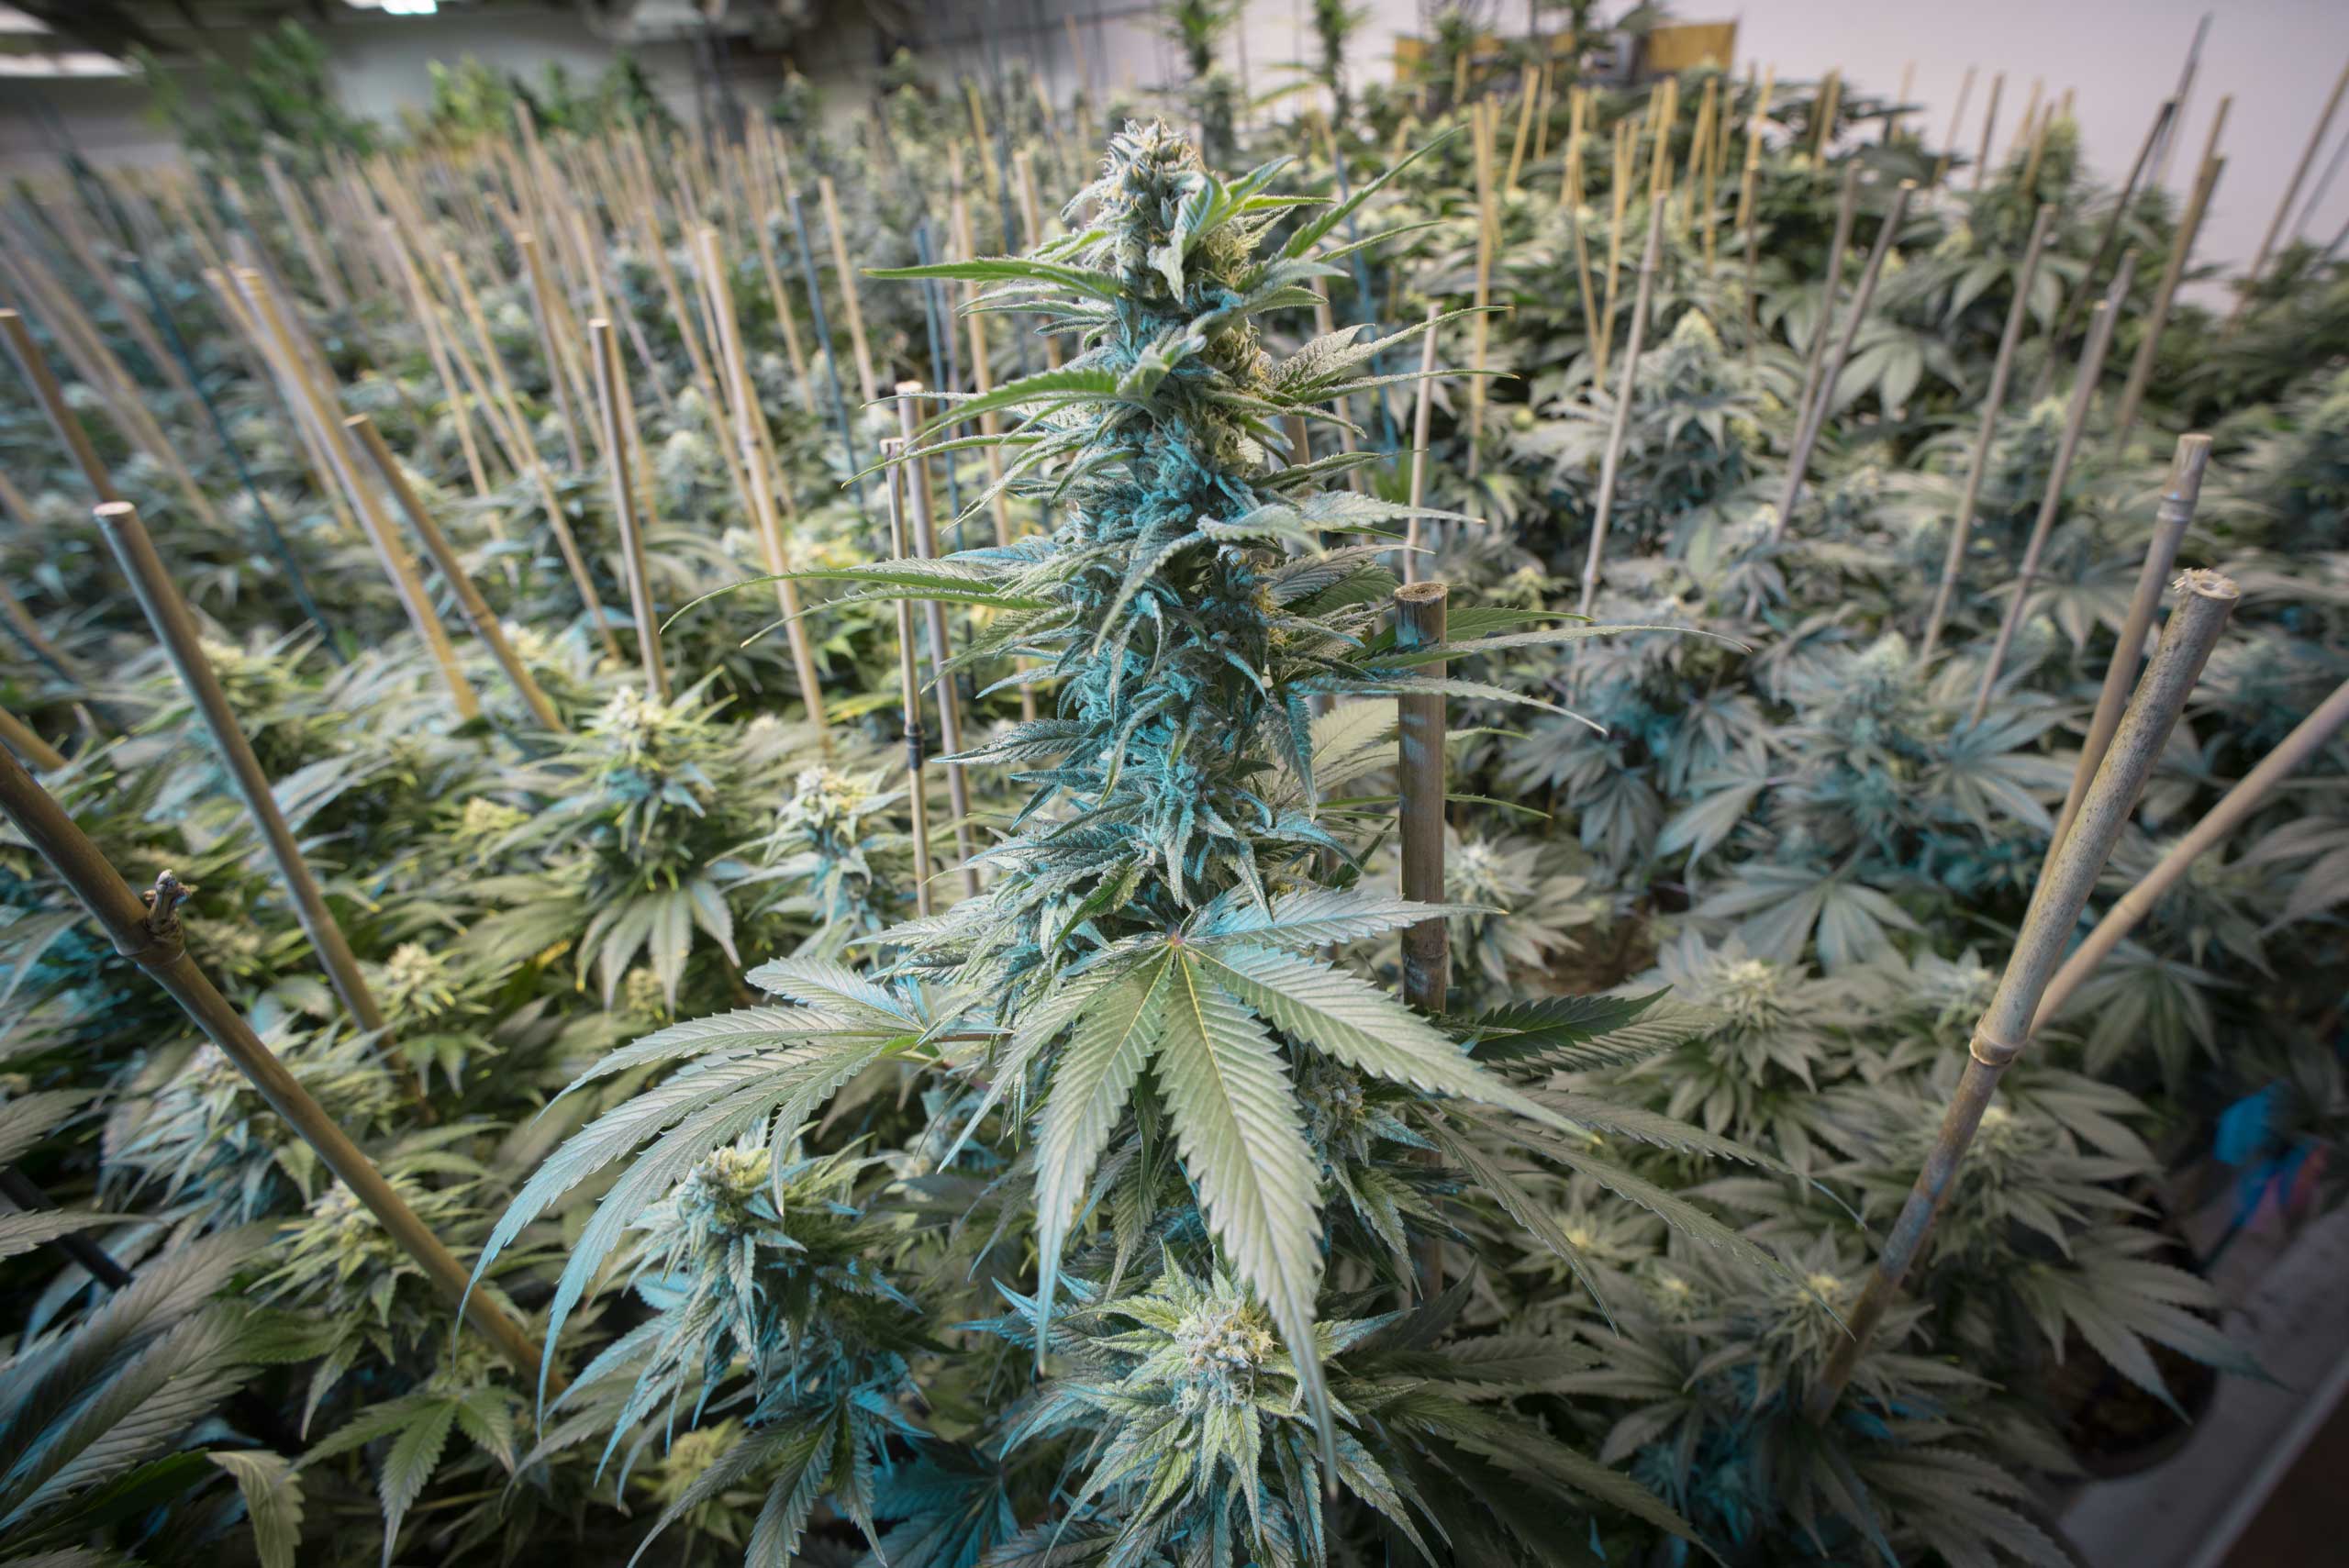 Denver, Colorado- Interior of a commercial medical and recreational marijuana grow facility. (Jon Paciaroni—Moment Editorial/Getty Images)